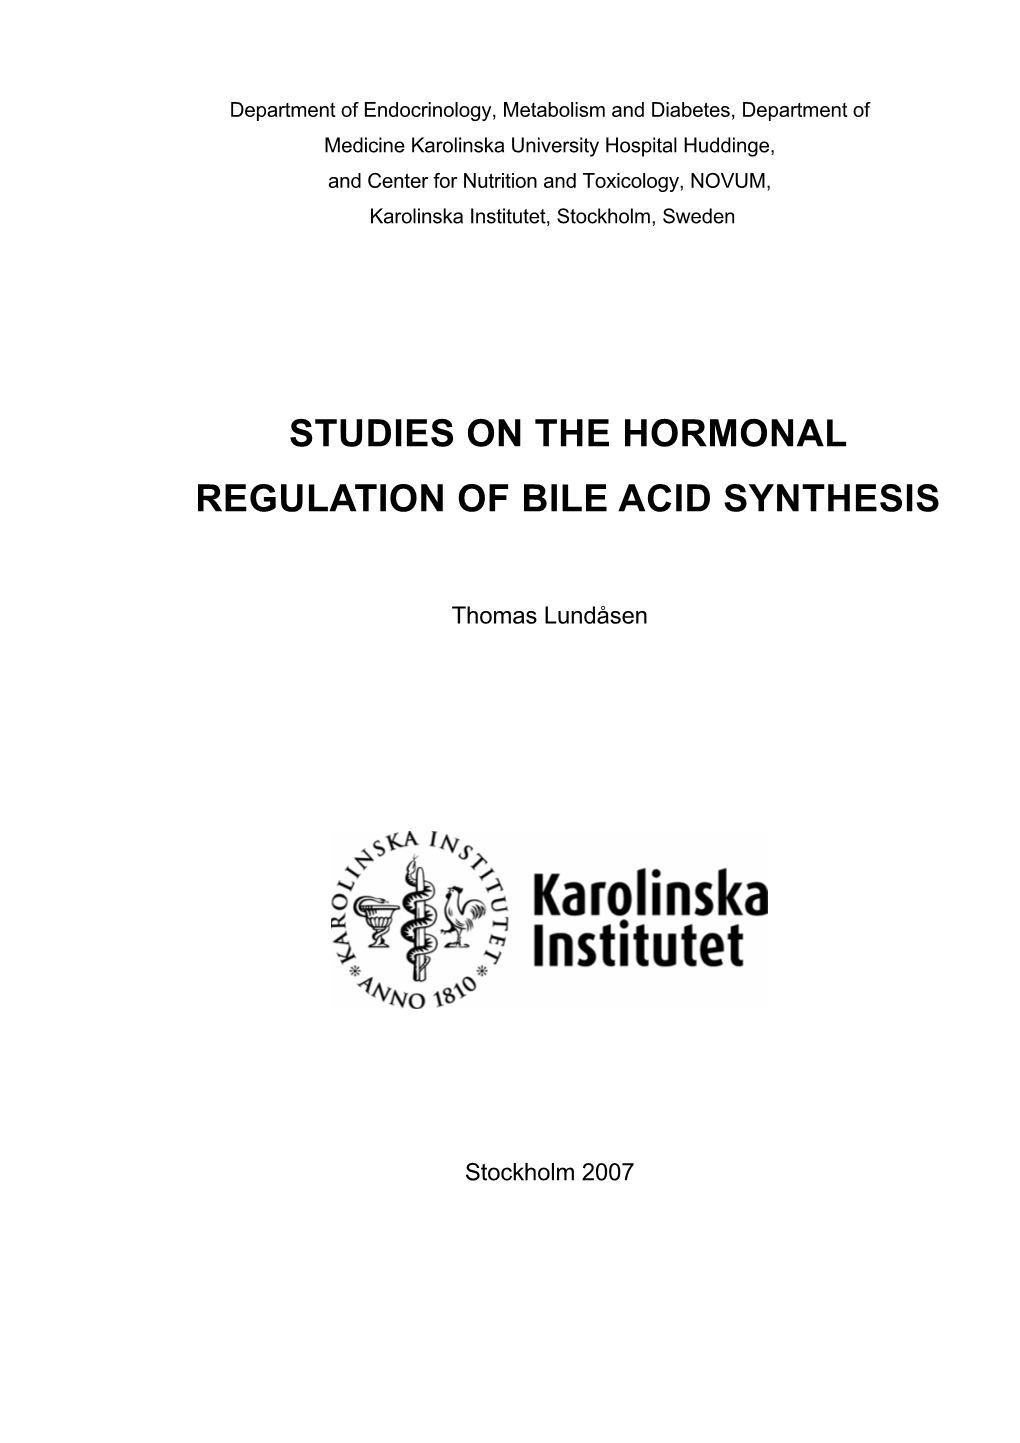 Studies on the Hormonal Regulation of Bile Acid Synthesis